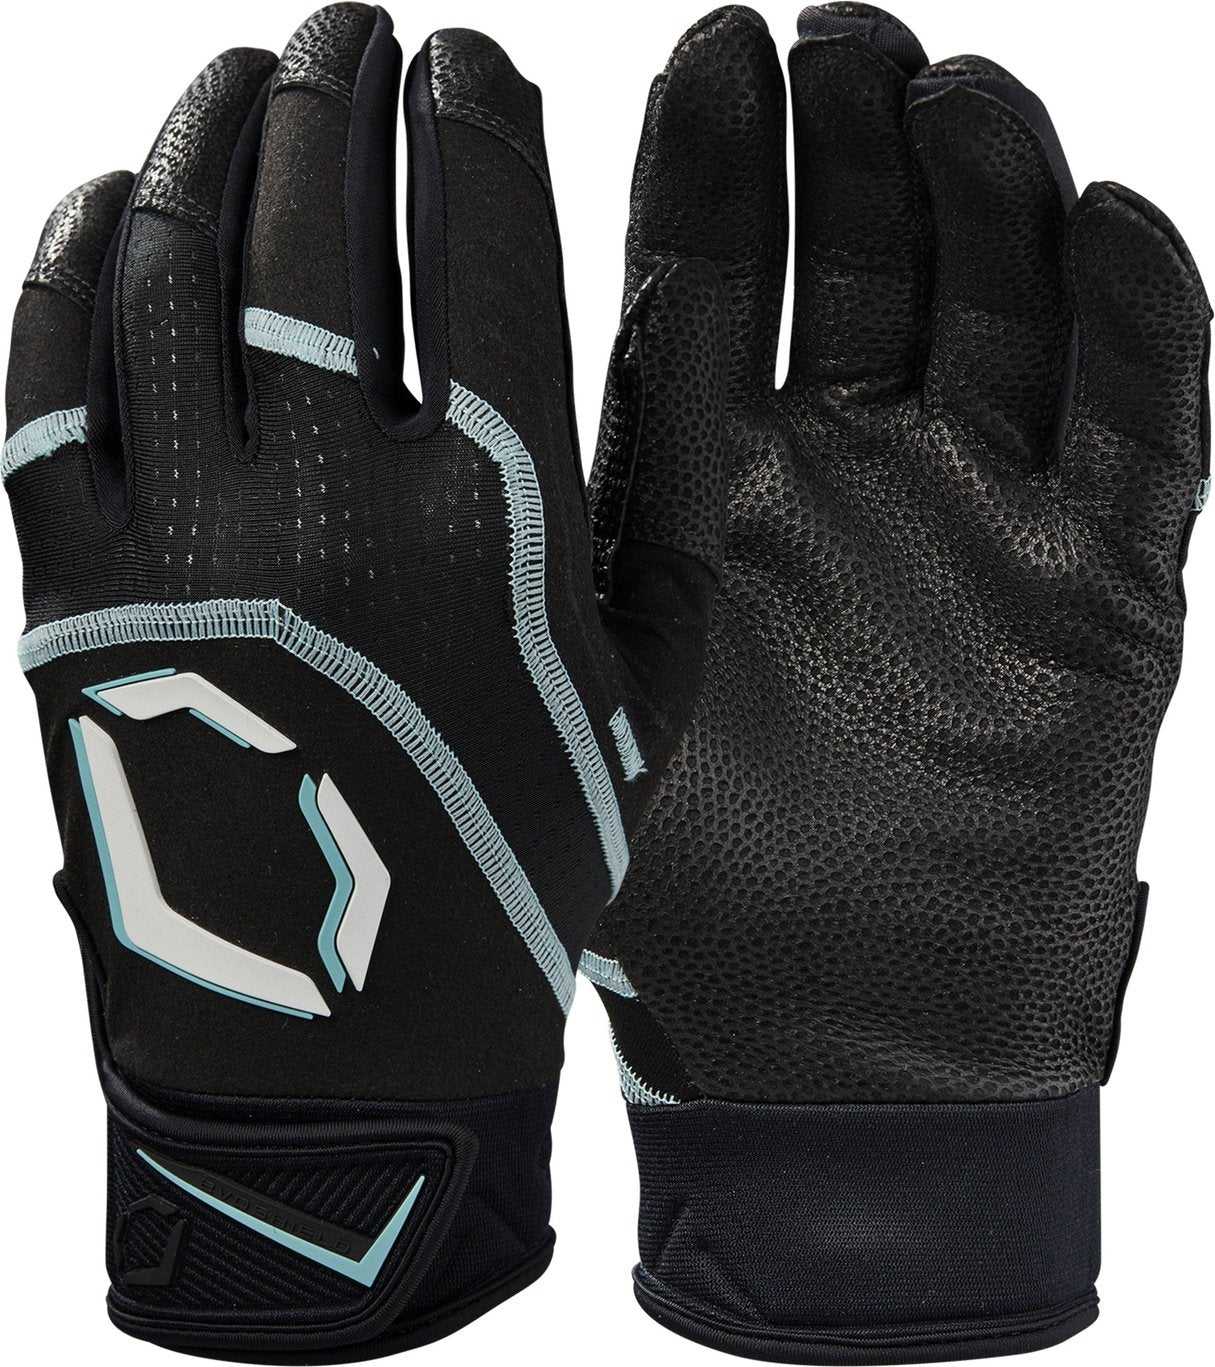 EvoShield Adult Evo Khaos Batting Gloves - Black - HIT A Double